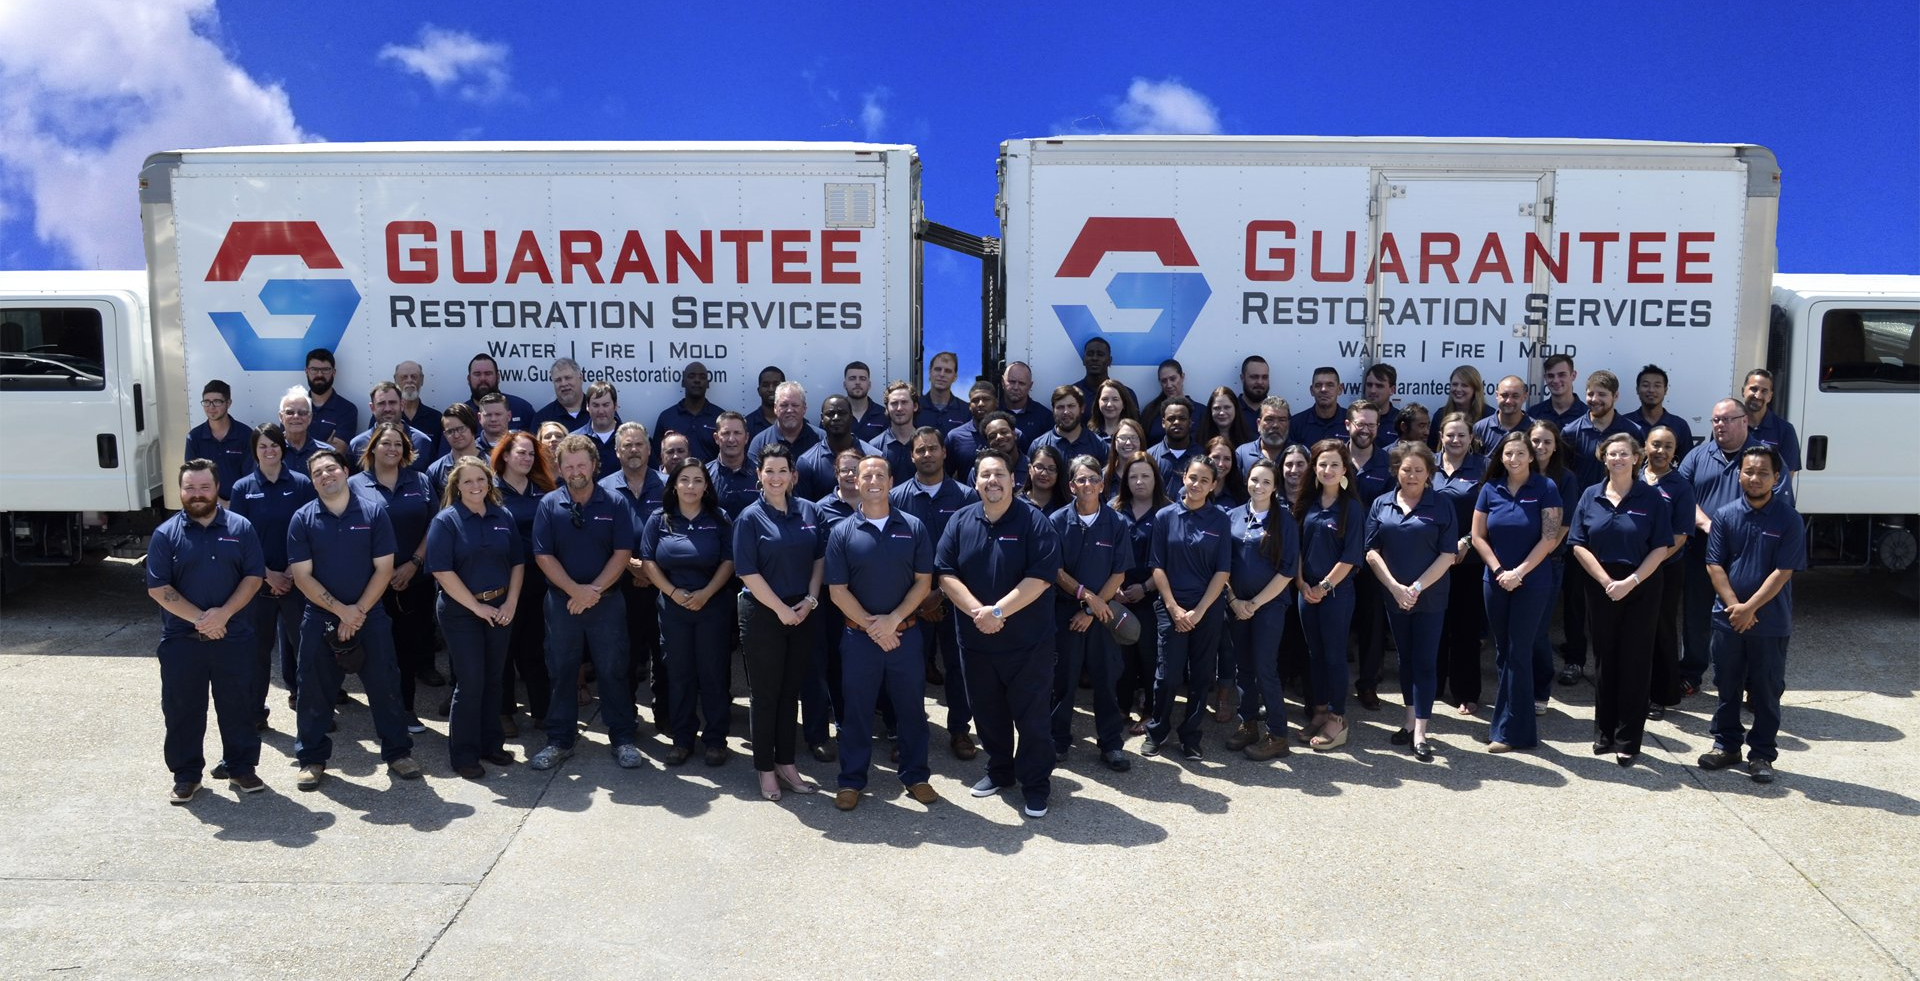 guarantee restoration services team